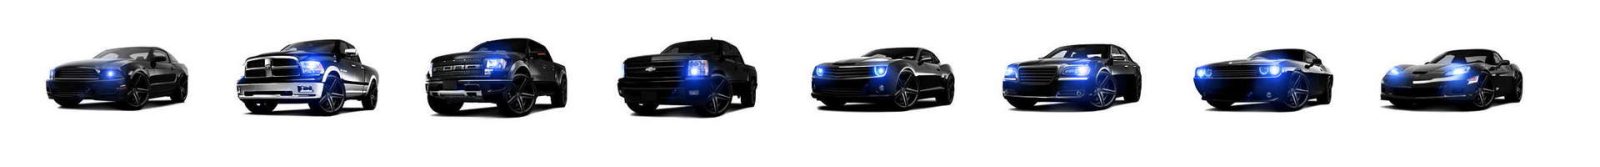 Halo Headlights for Cars, Truck, SUVs